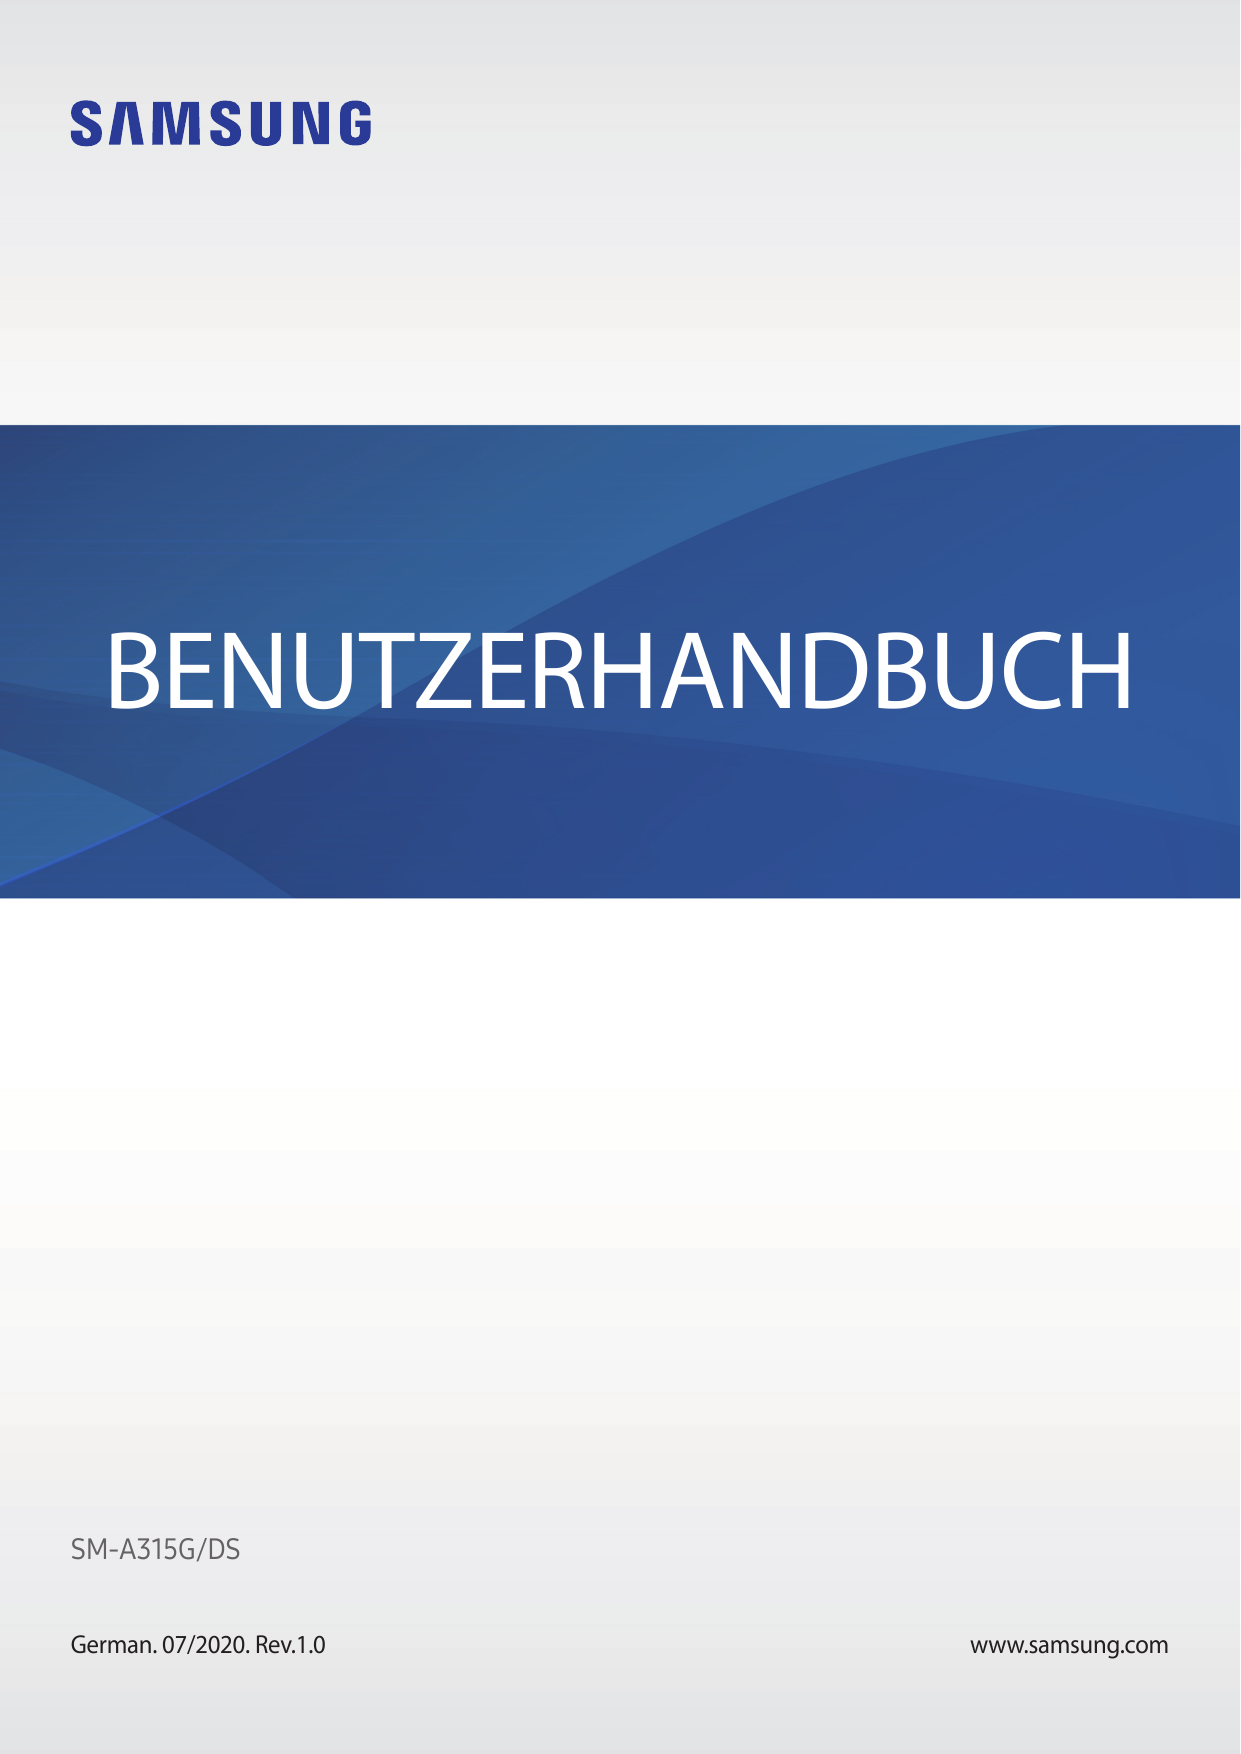 BENUTZERHANDBUCHSM-A315G/DSGerman. 07/2020. Rev.1.0www.samsung.com